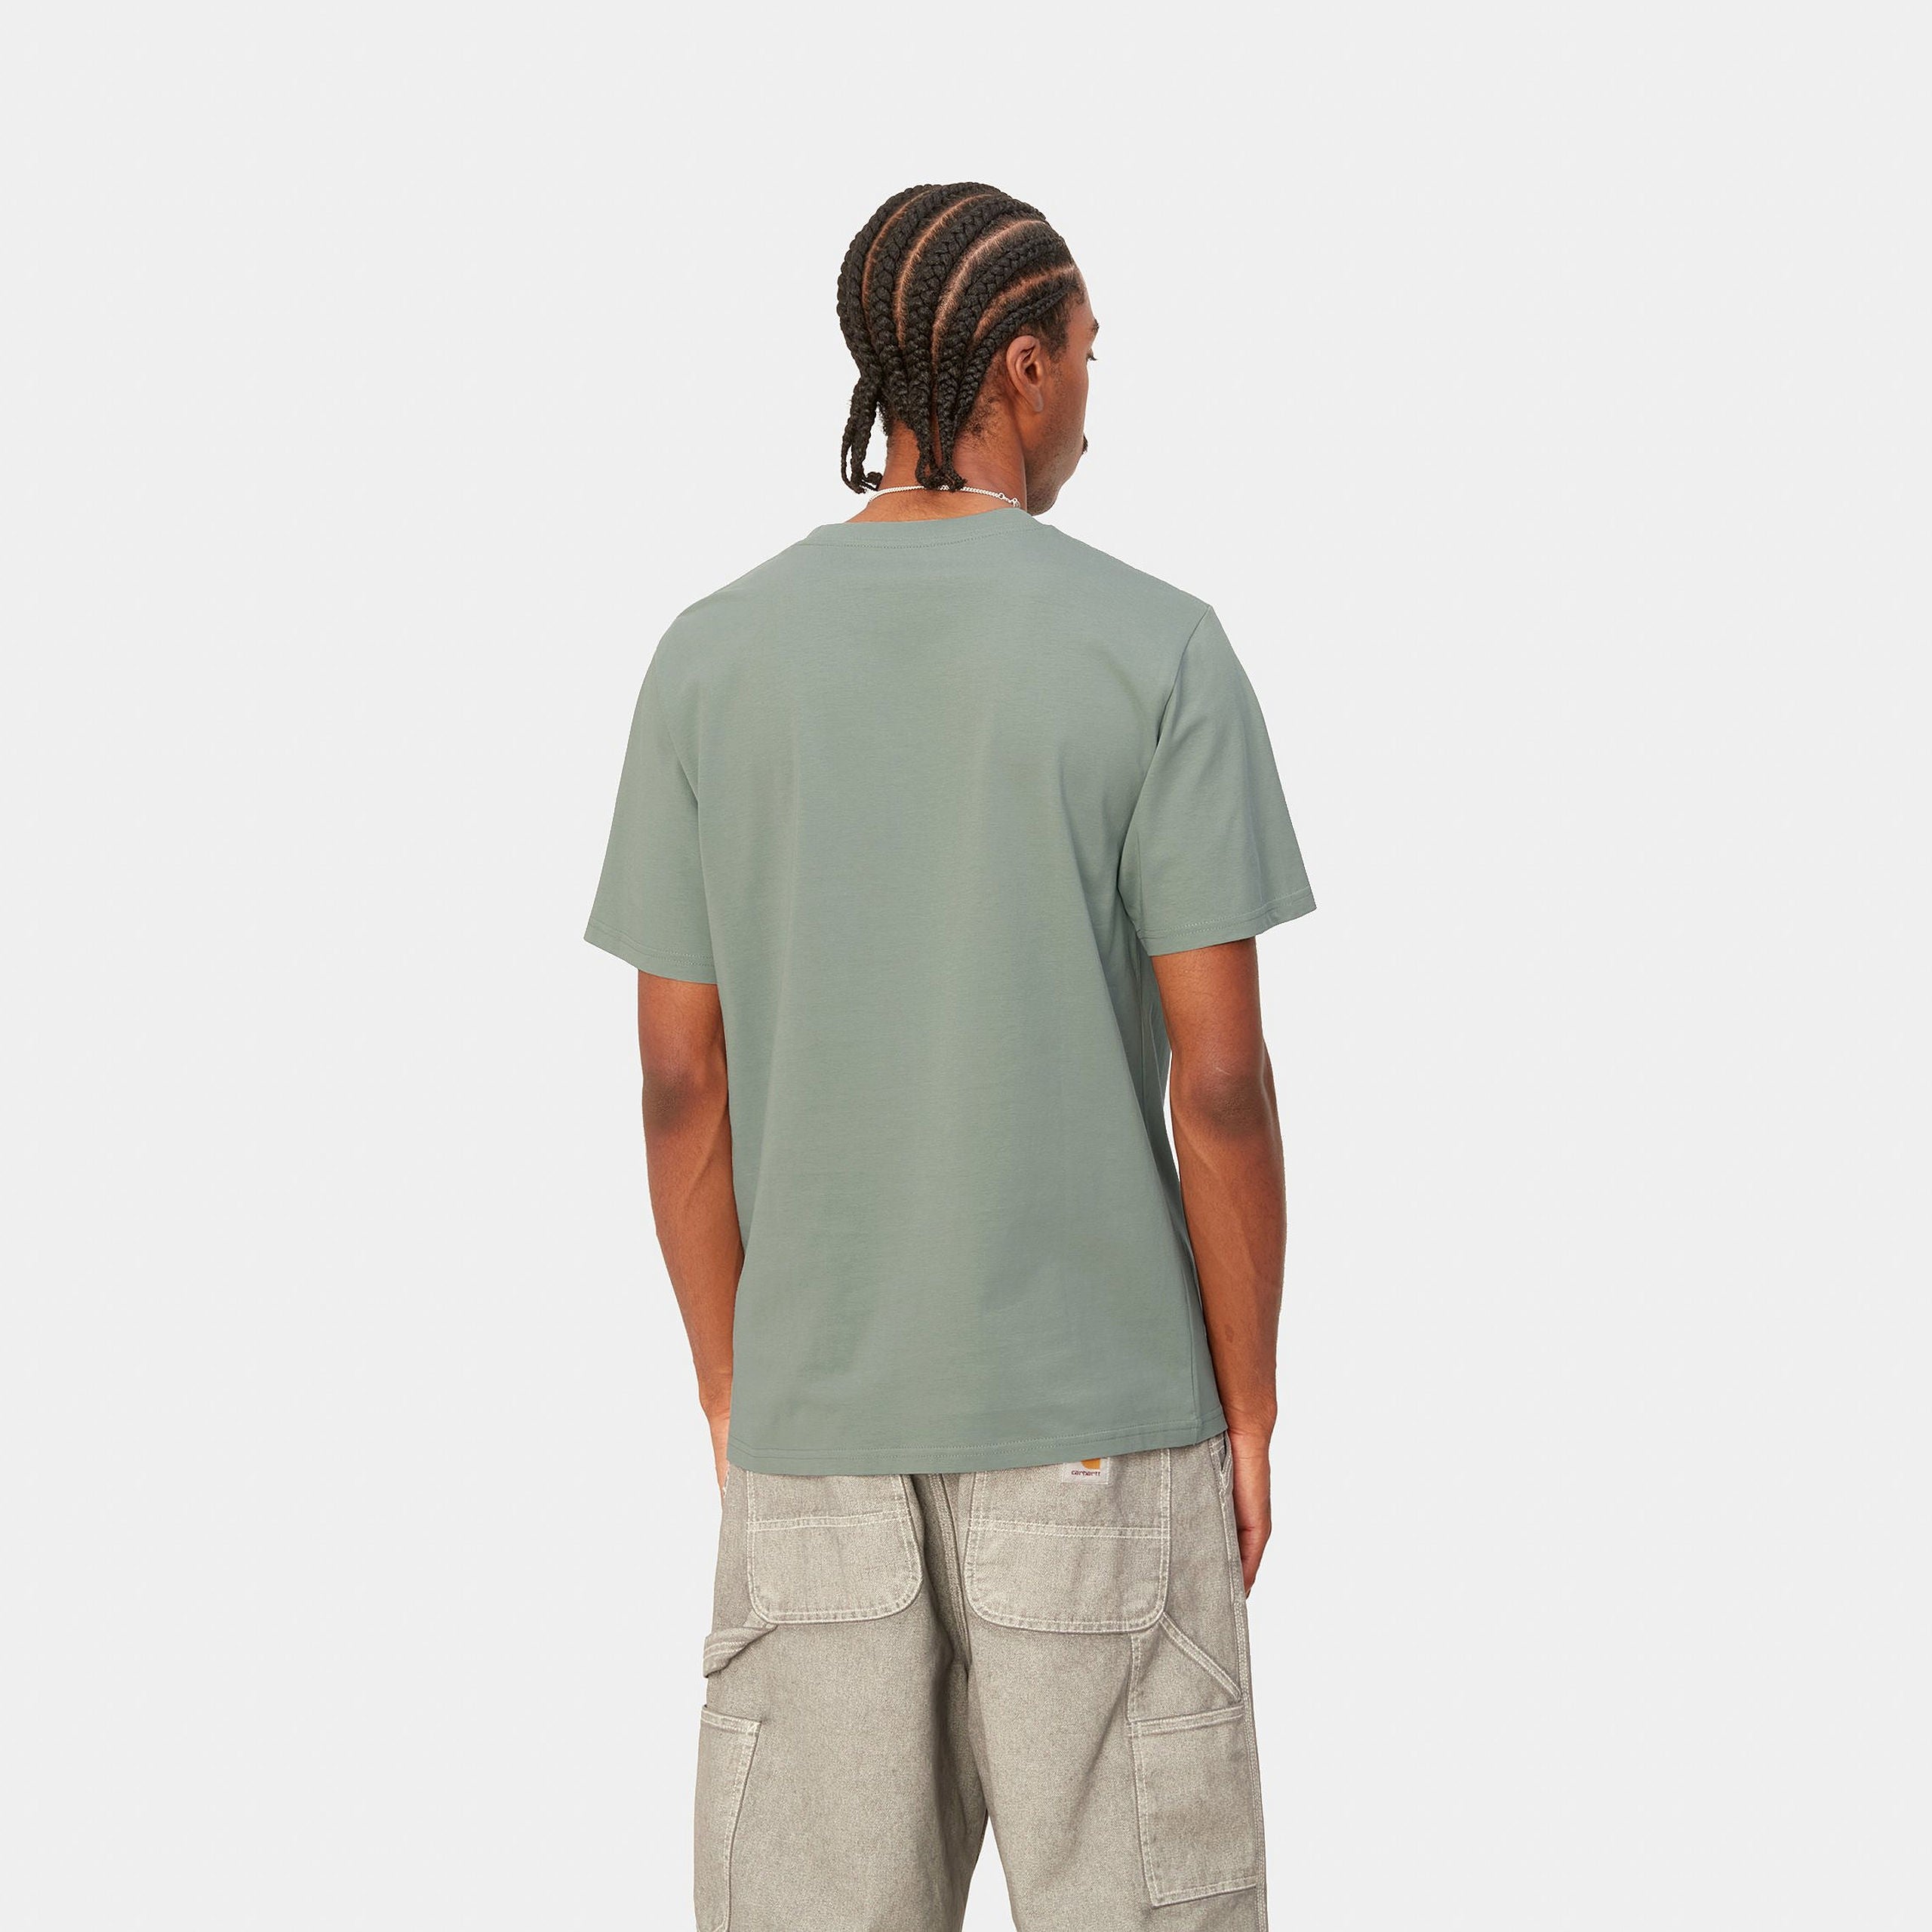 Camiseta Carhartt Pocket S/s Glassy Teal